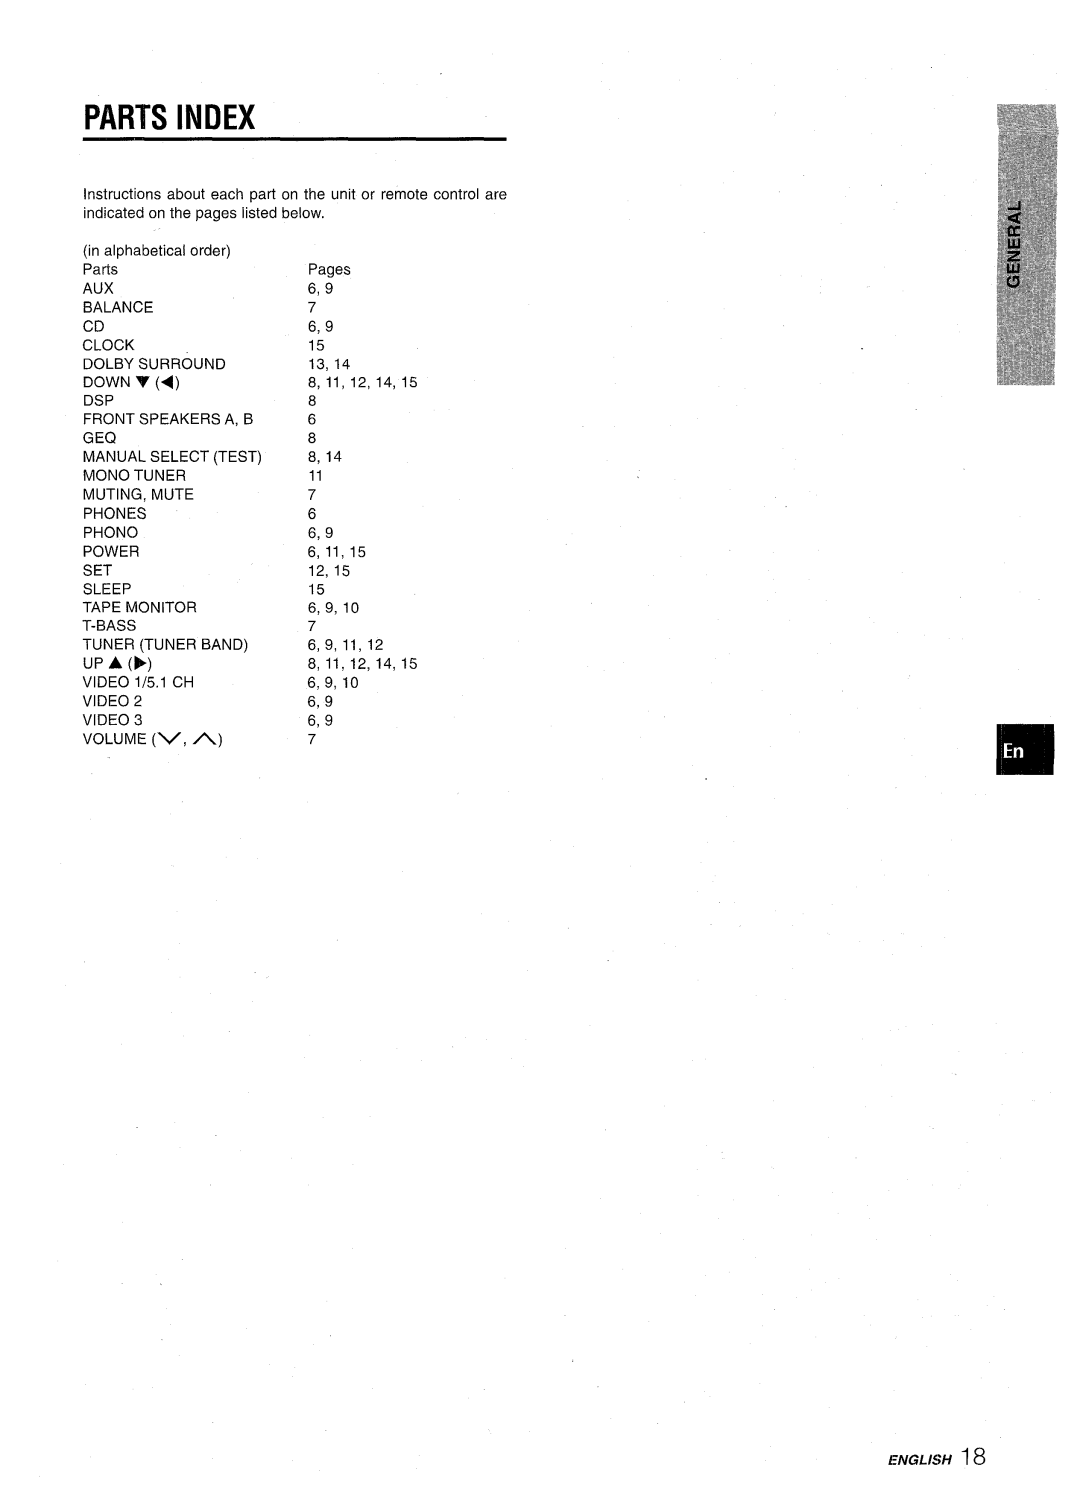 Aiwa AV-D30 manual Parts Index, English 